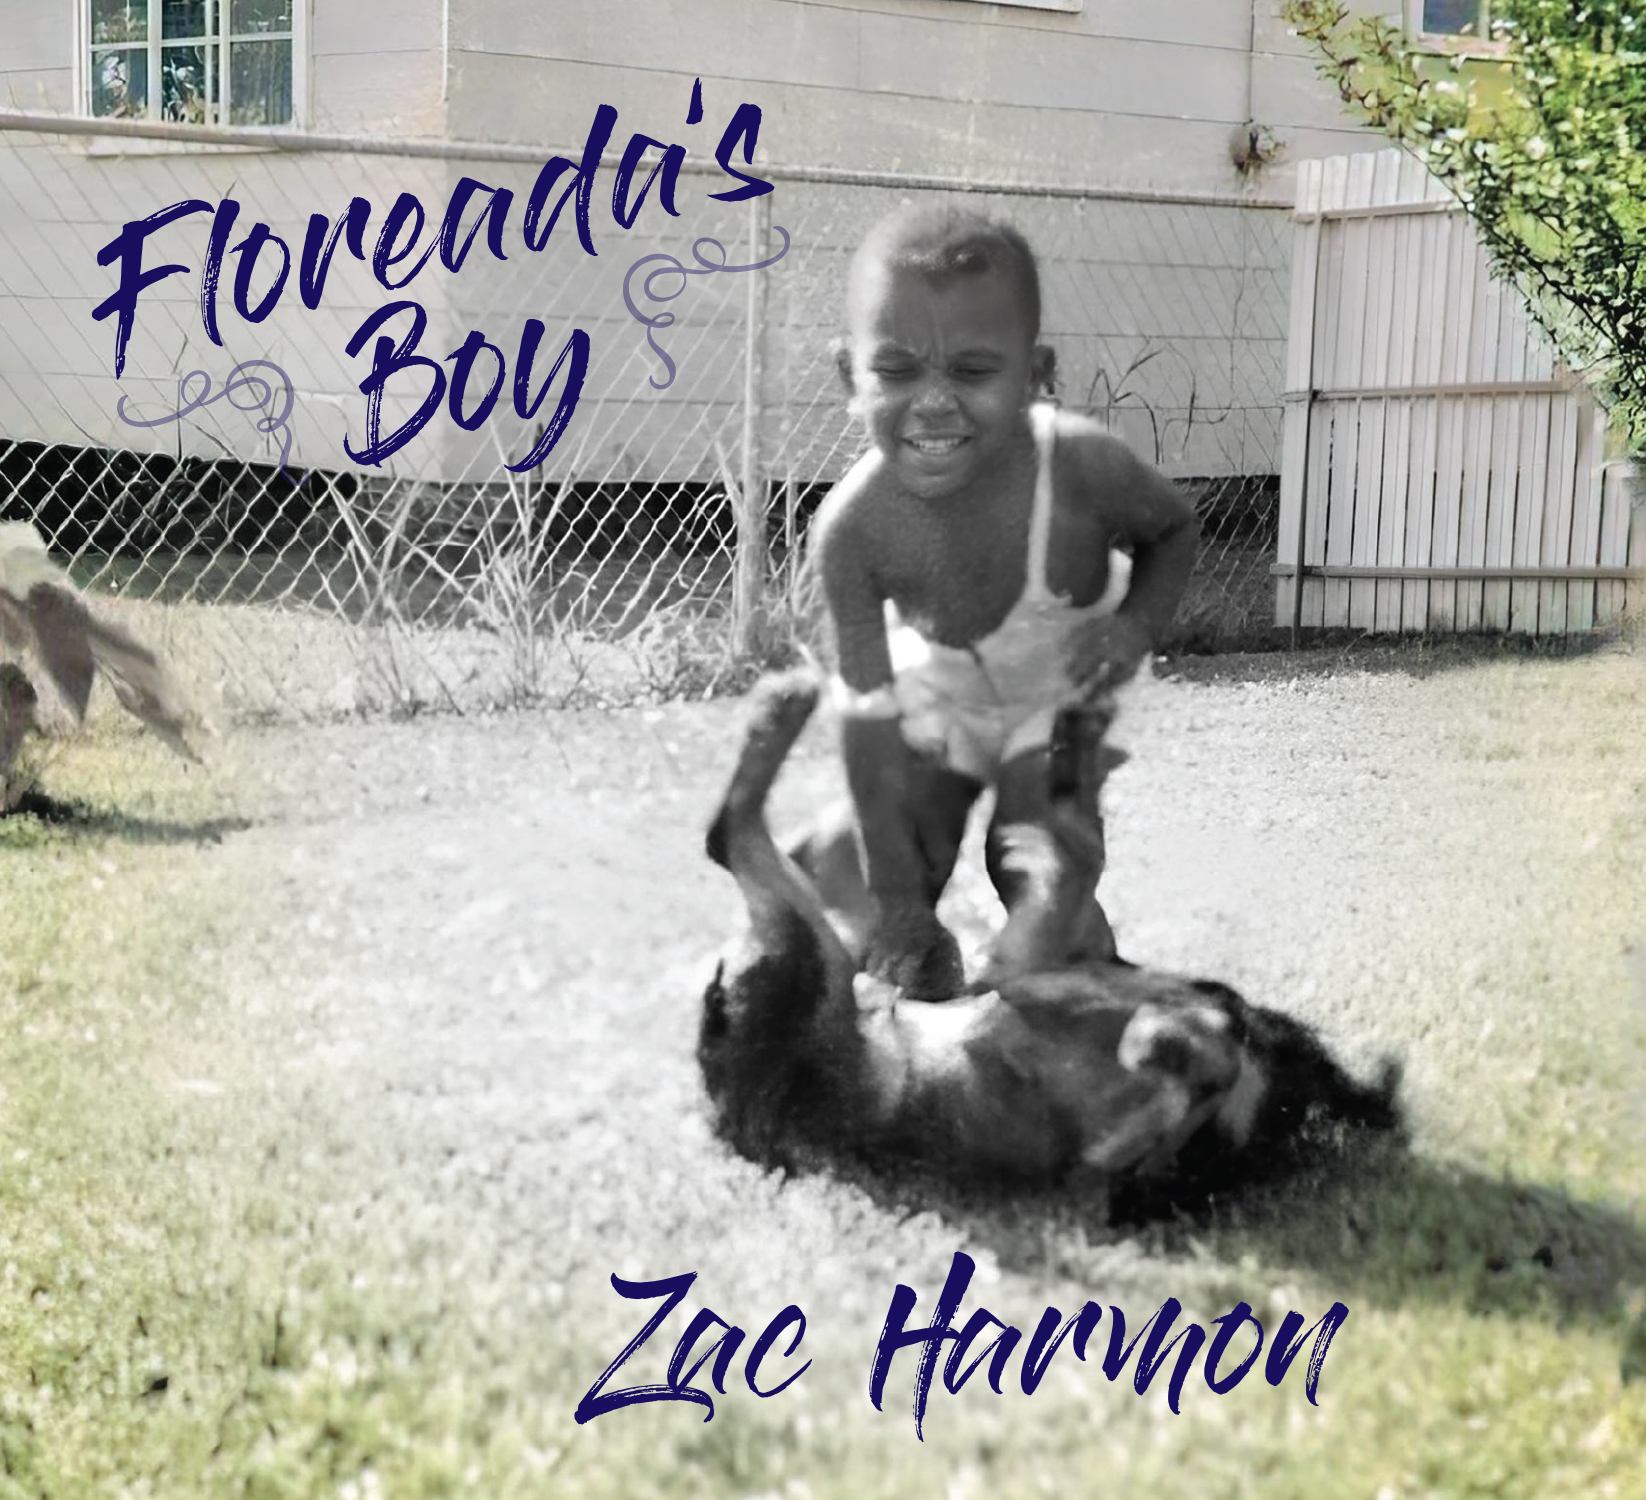 Zac Harmon (AKA Floreada’s Boy) Set to Release New CD and Vinyl LP from Award-Winning Blues Singer/Guitarist on August 1